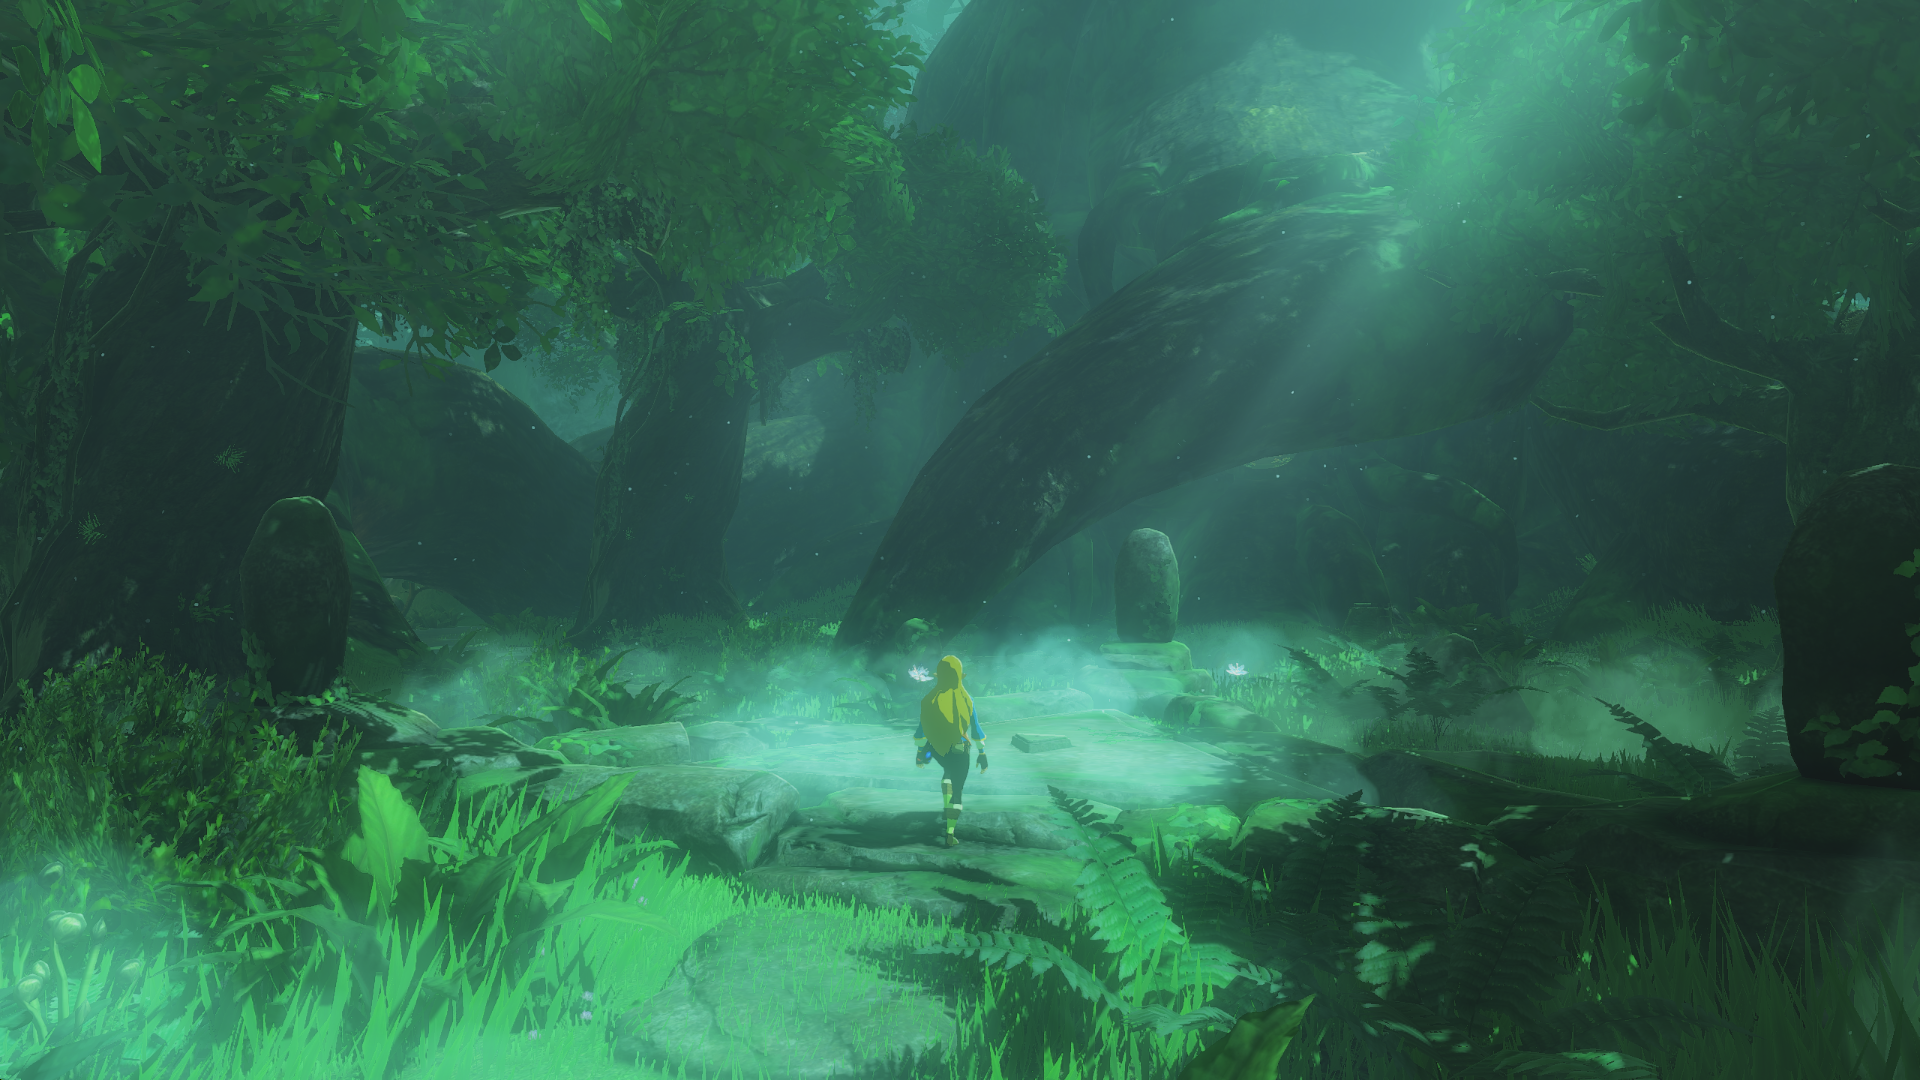 Zelda In Korok Forest Wallpaper 1080p, R Breath_of_the_Wild